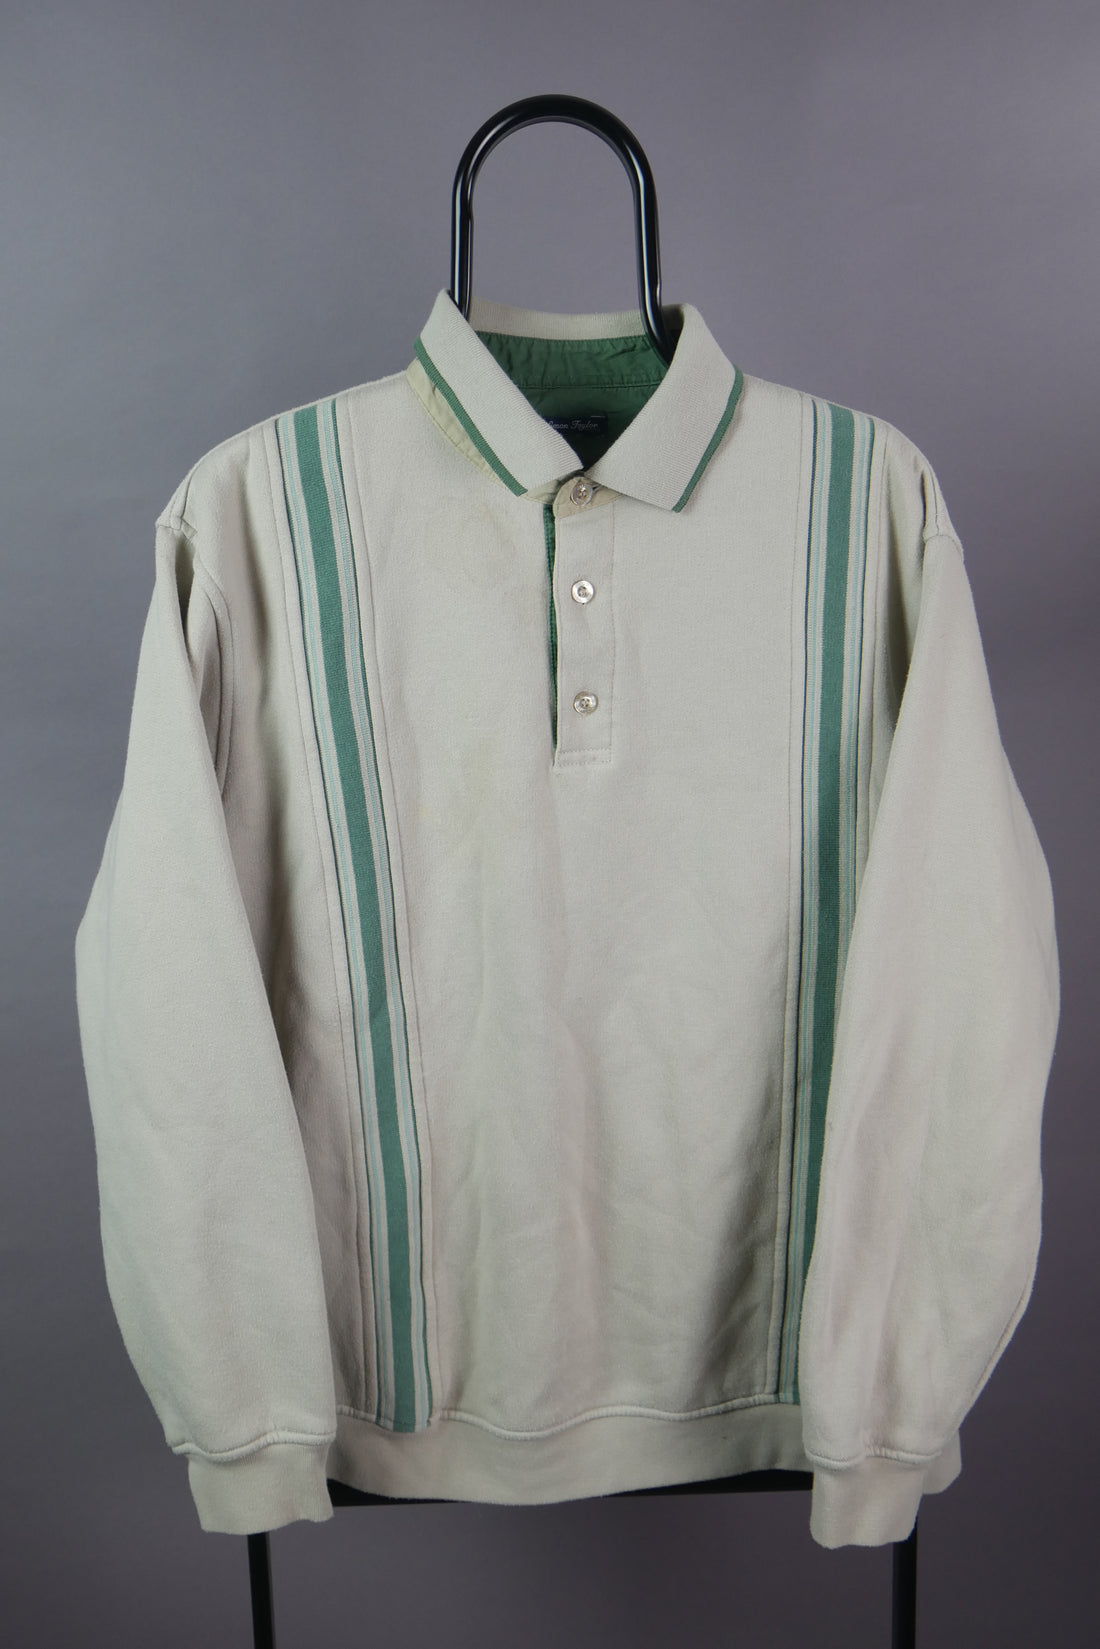 The Vintage Collared Sweatshirt (L)